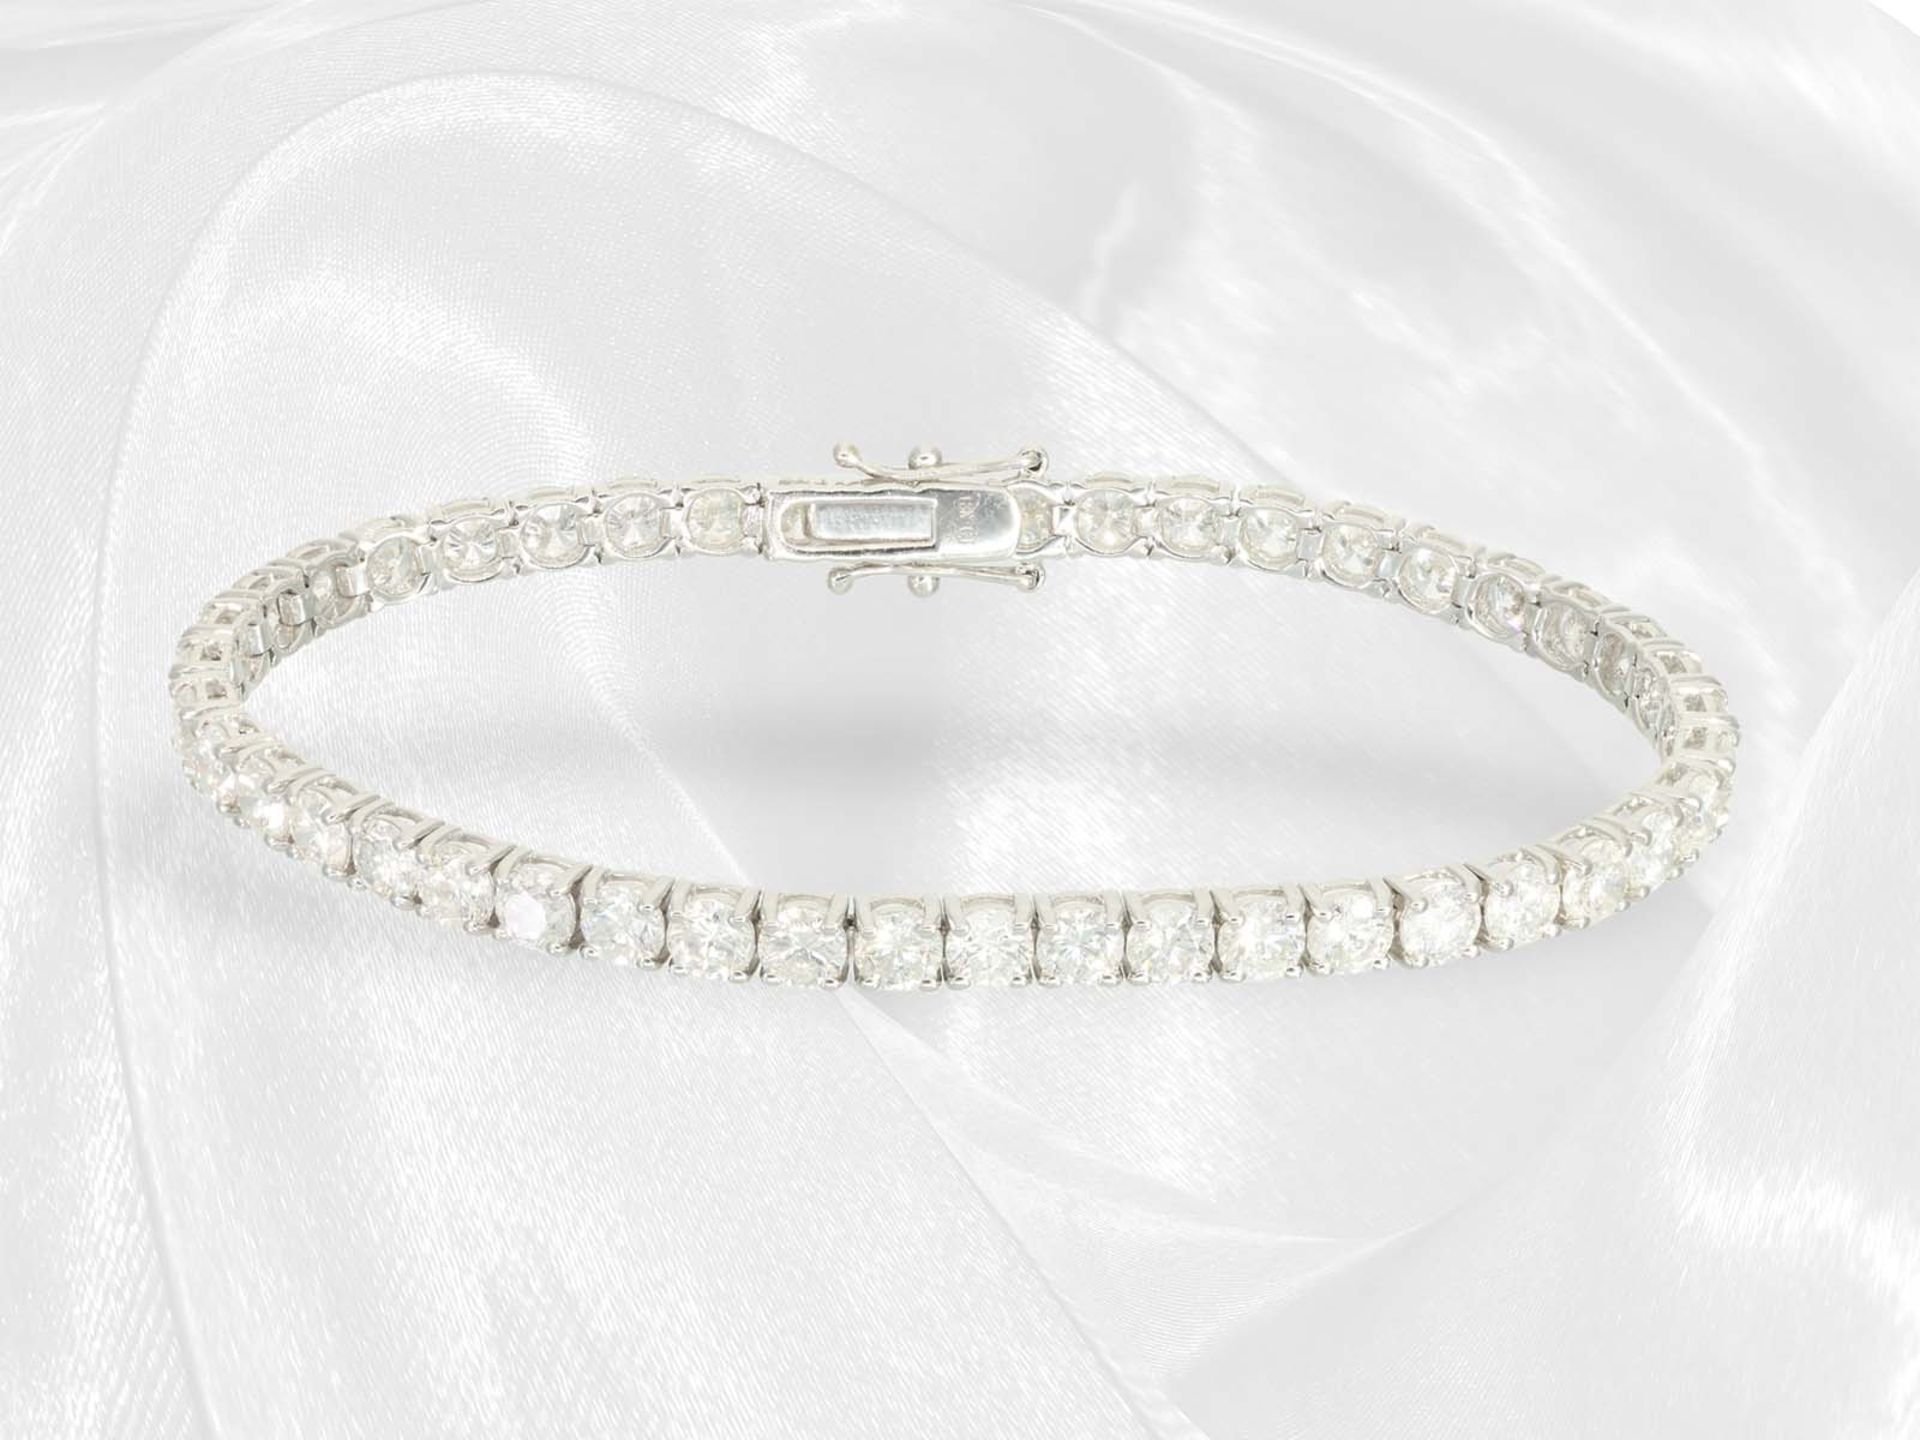 Bracelet: modern tennis bracelet with exceptionally large brilliant-cut diamonds, approx. 10.5ct